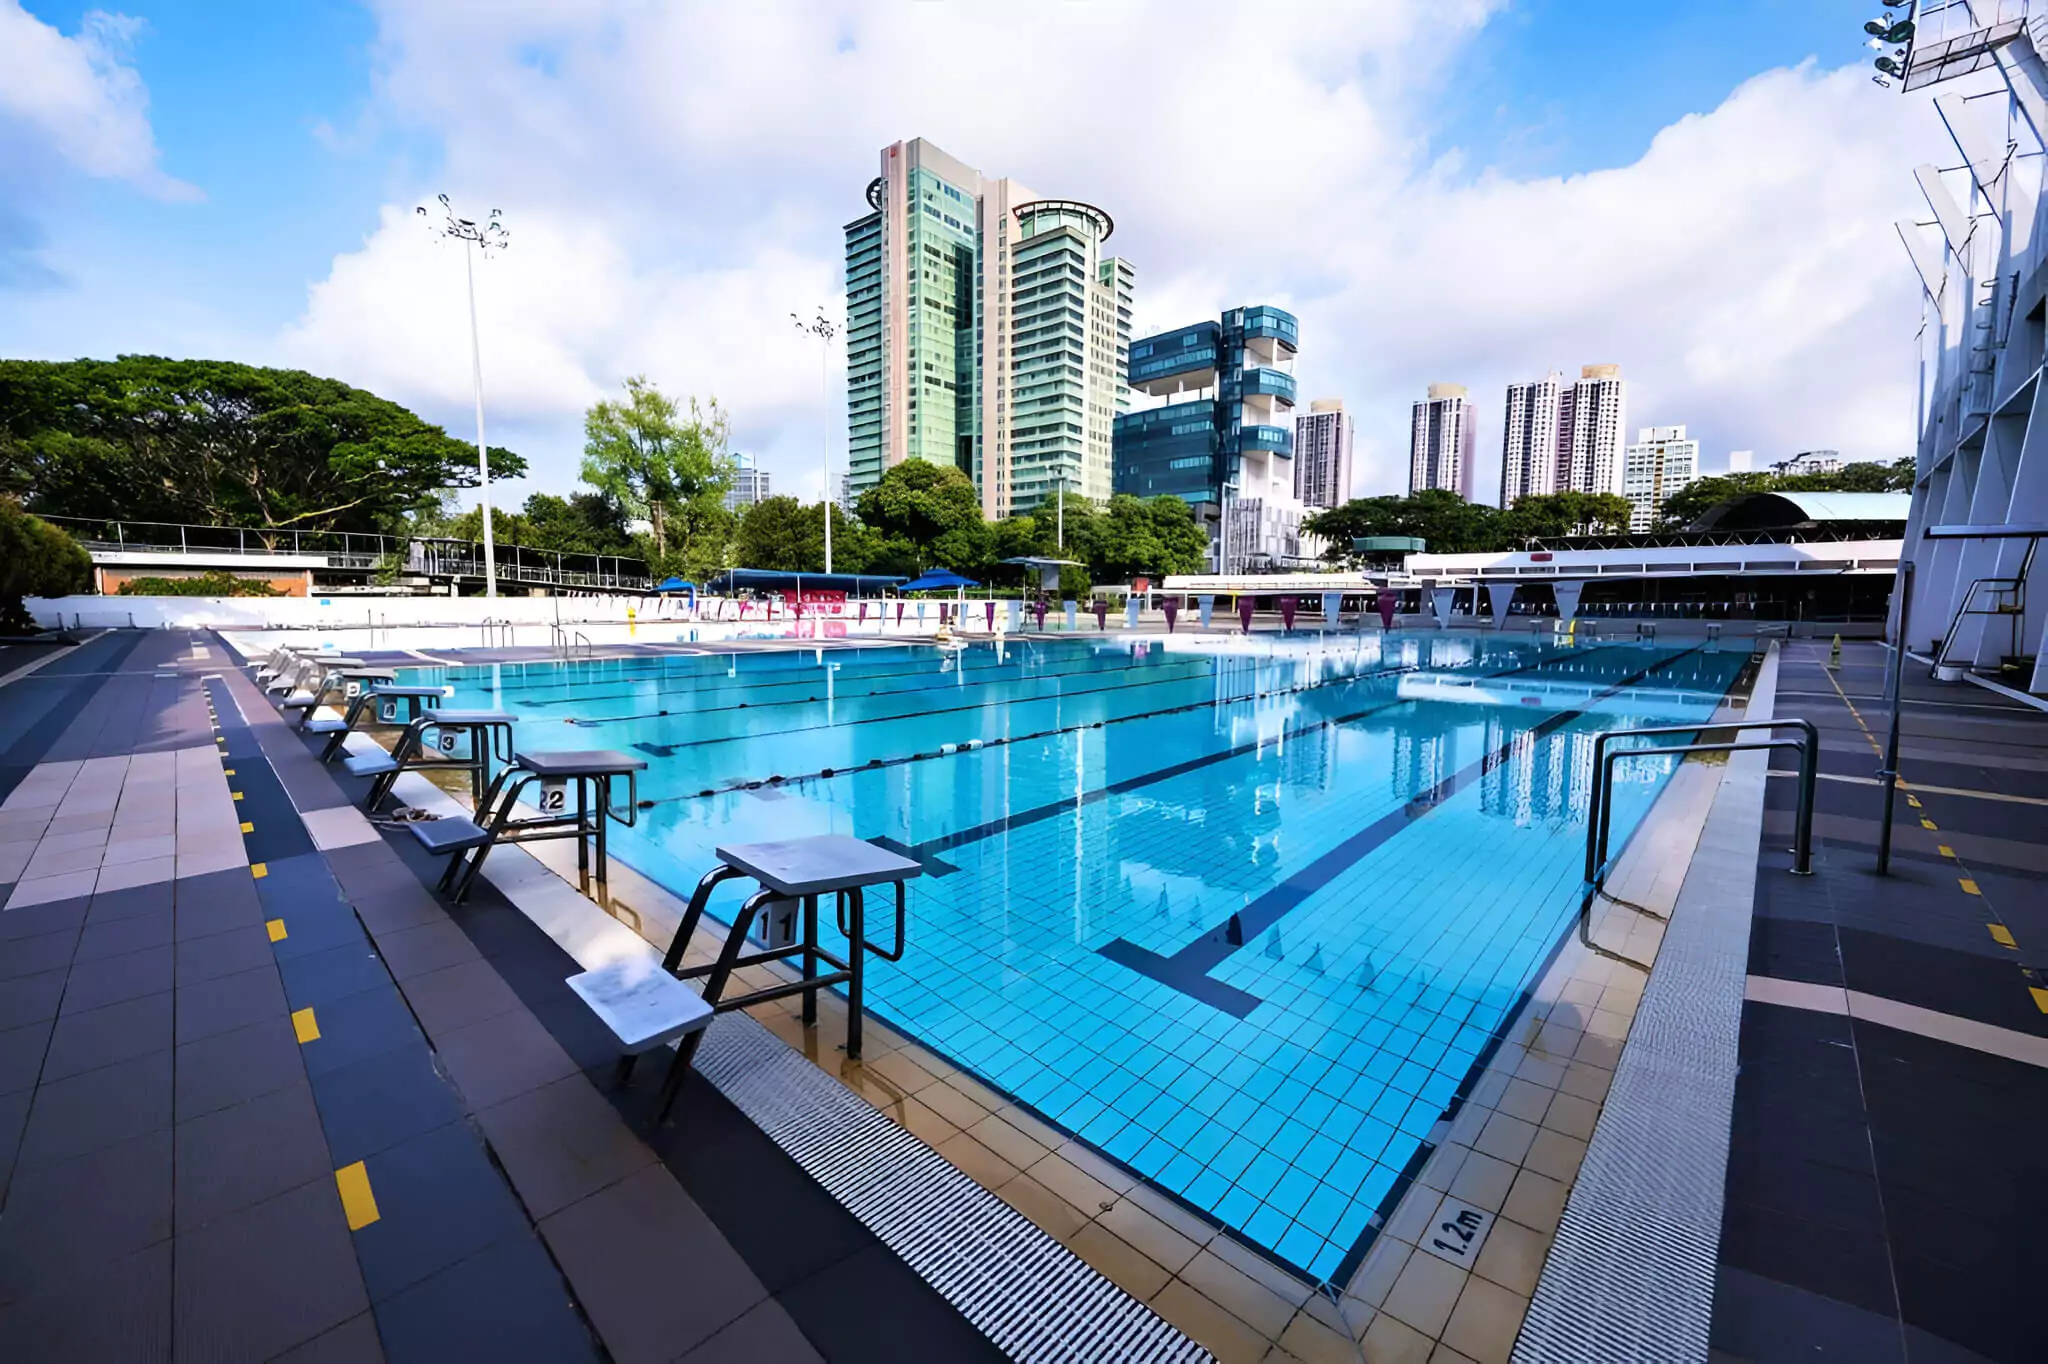 Toa Payoh Swimming Complex with Swim101